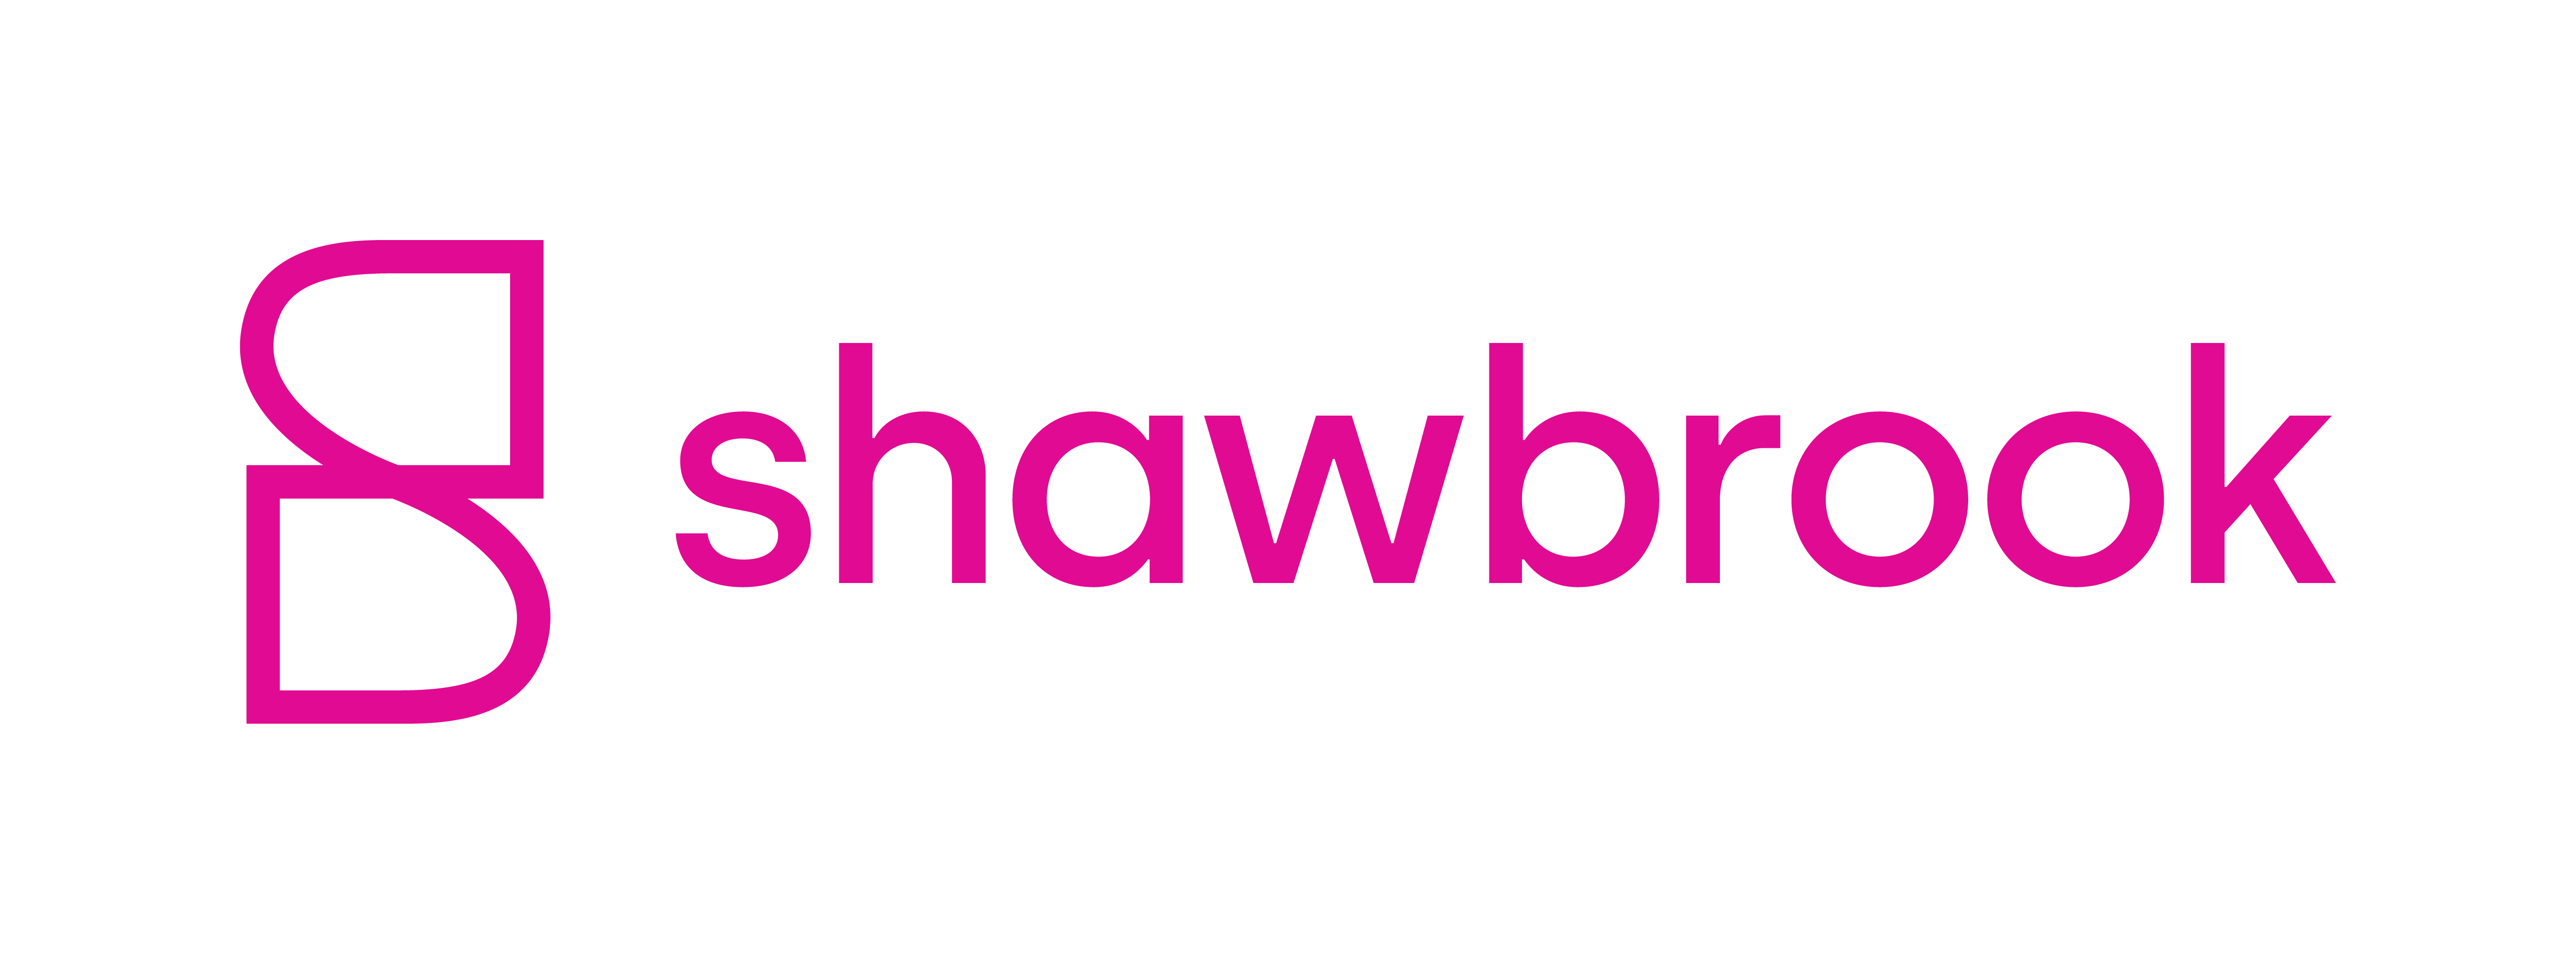 Shawbrook_Logo_Pink_RGB copy